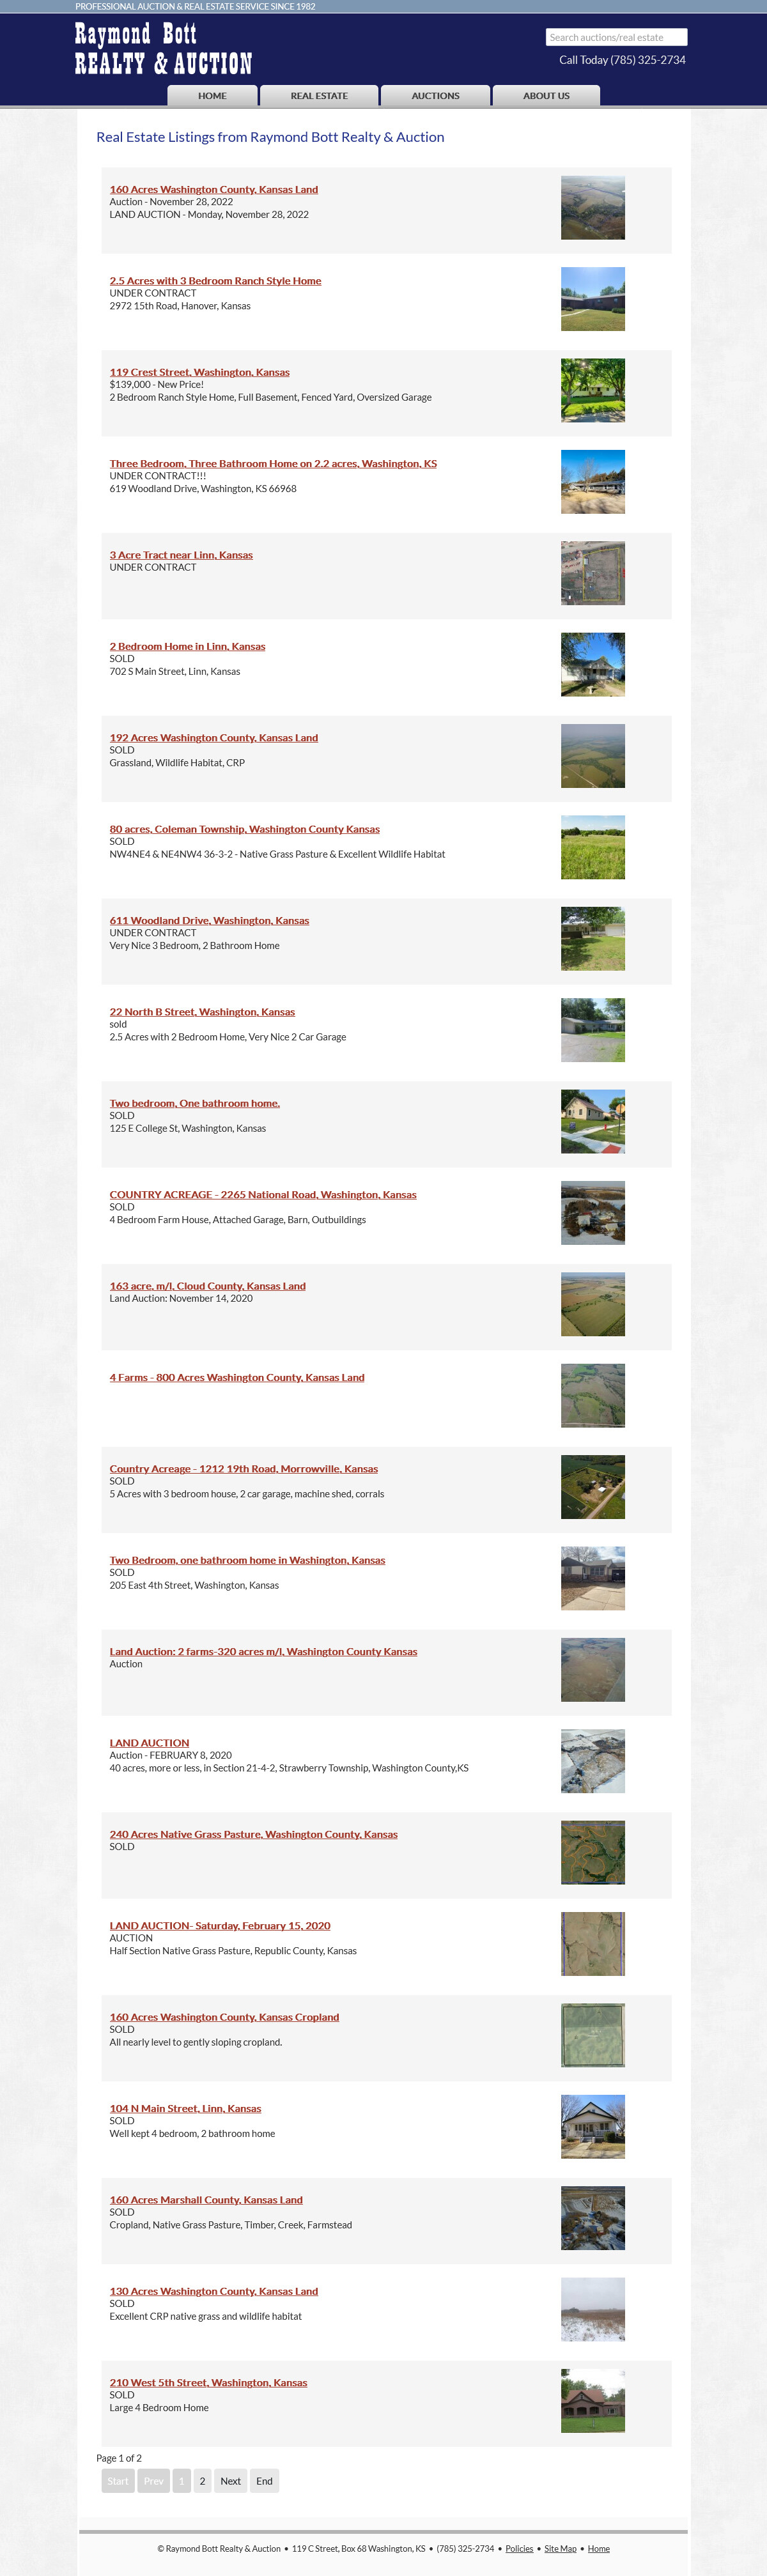 Bott Realty Auction website screenshot real estate listings